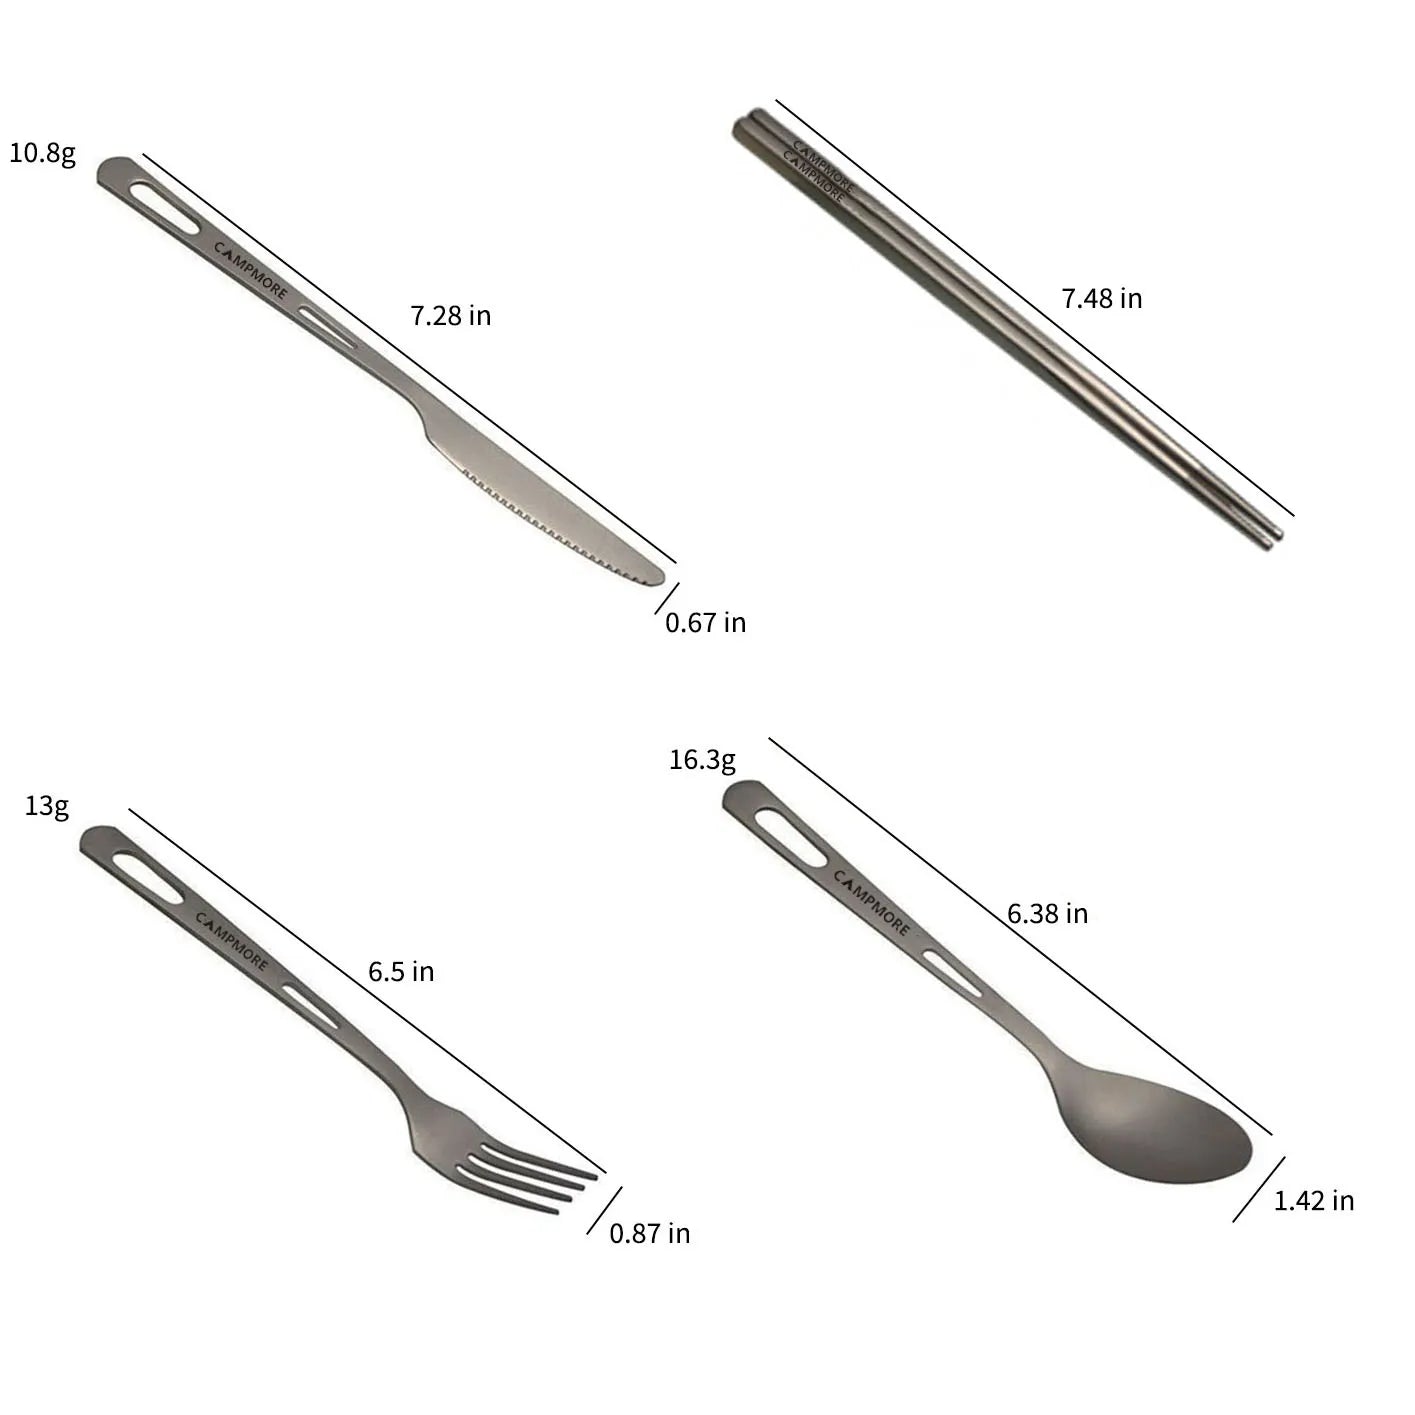 Titanium Tableware - Ultralight Cutlery Set for Camping